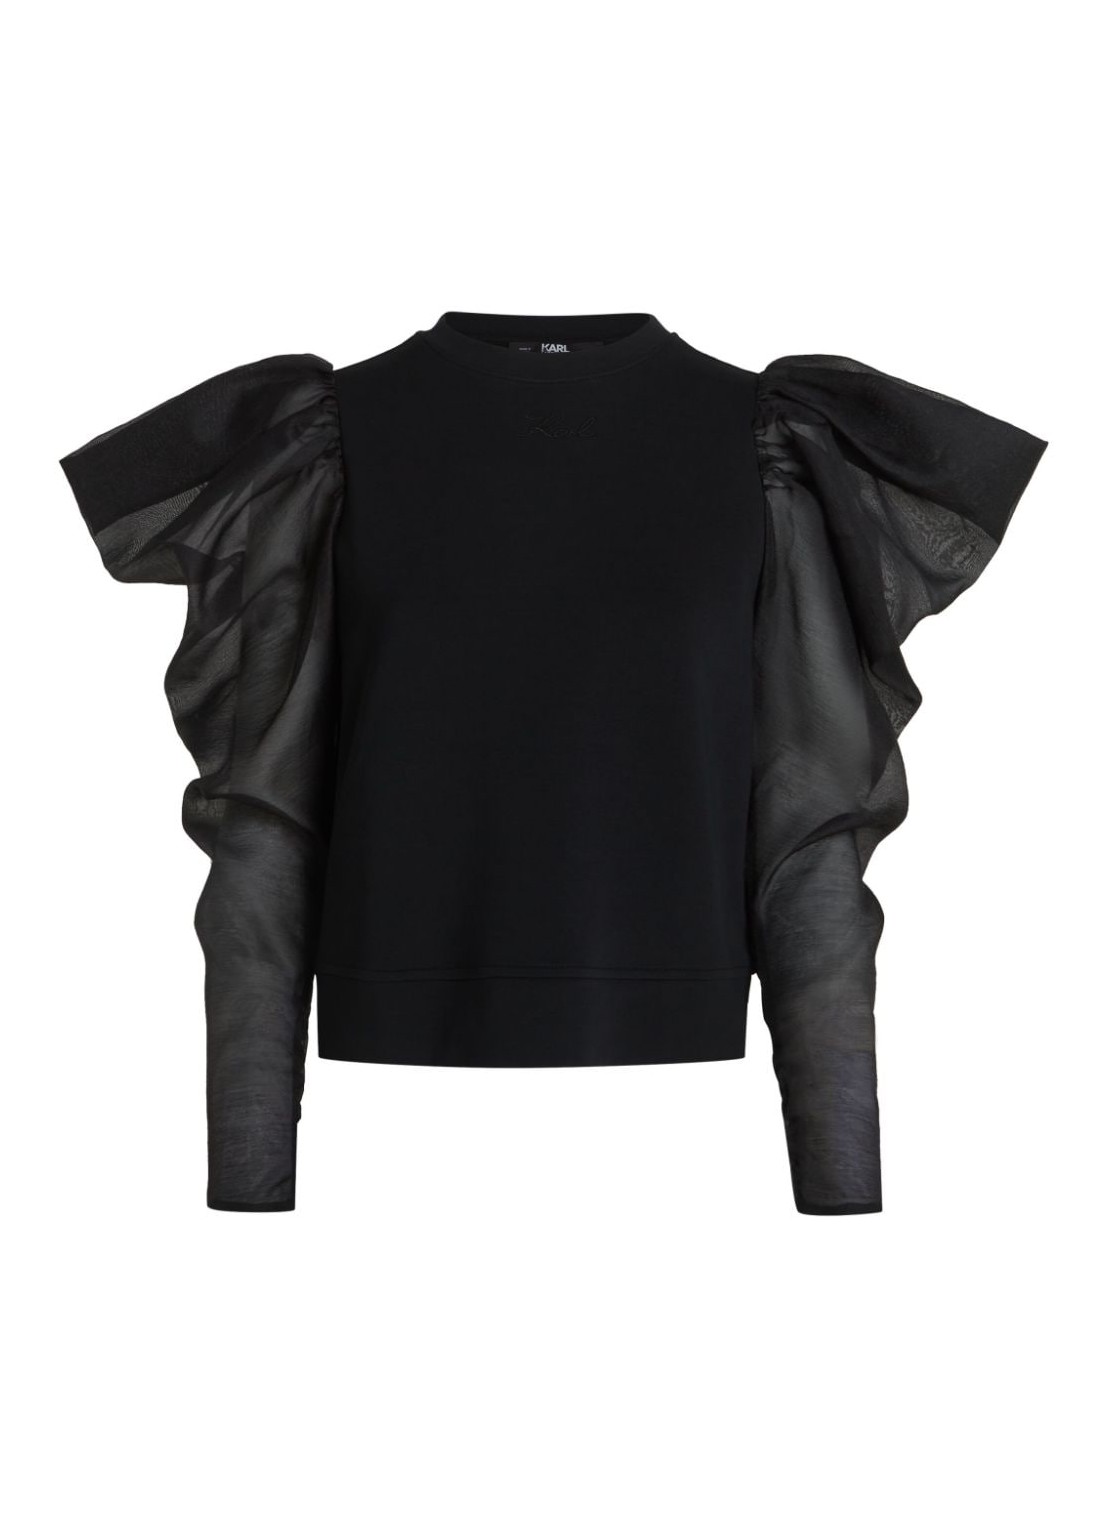 Punto karl lagerfeld knitwear woman fabric mix sweatshirt 240w1806 999 talla negro
 